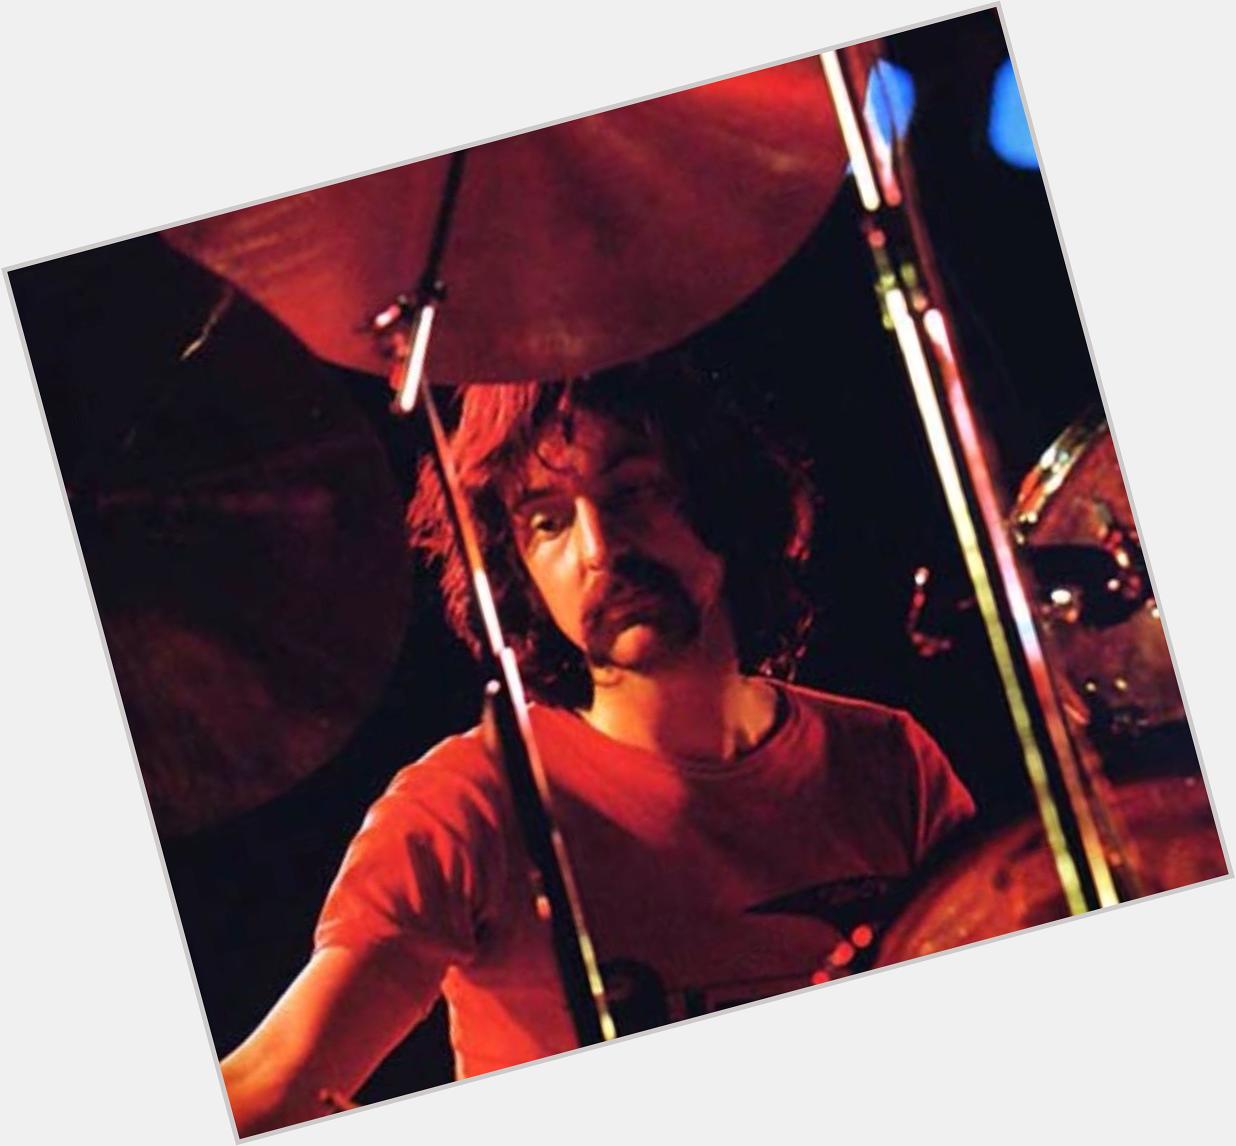 1/27/1944 Happy Birthday, Nick Mason, drummer and founding 
                 member of Pink Floyd 